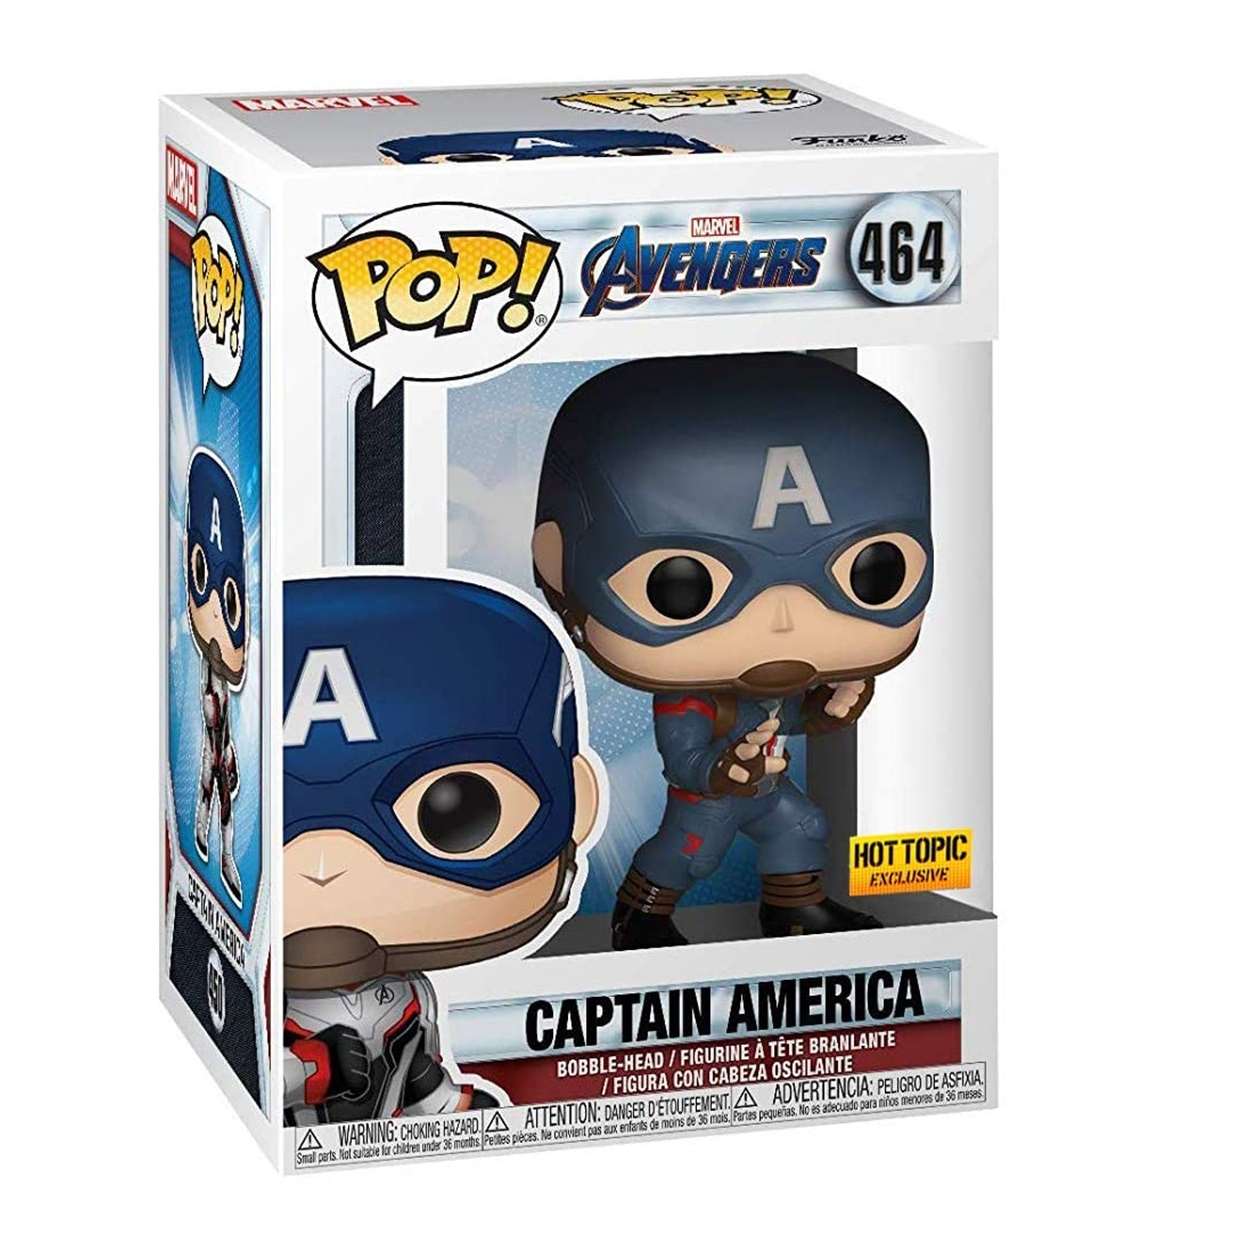 Capitán América #464 Avengers End Game Funko Pop! Hot Topic